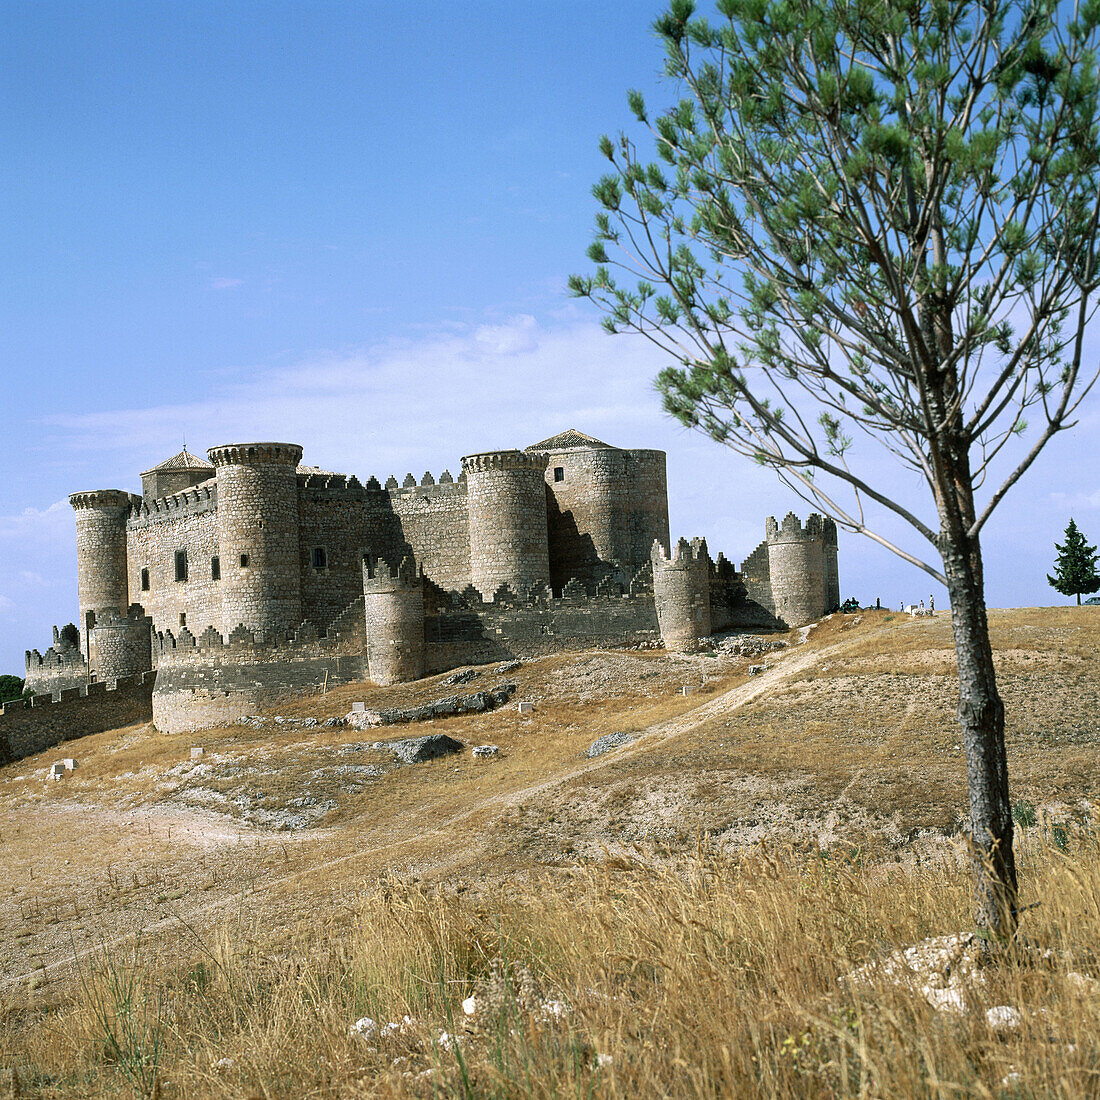 Belmonte castle (15th century). Cuenca province, Spain